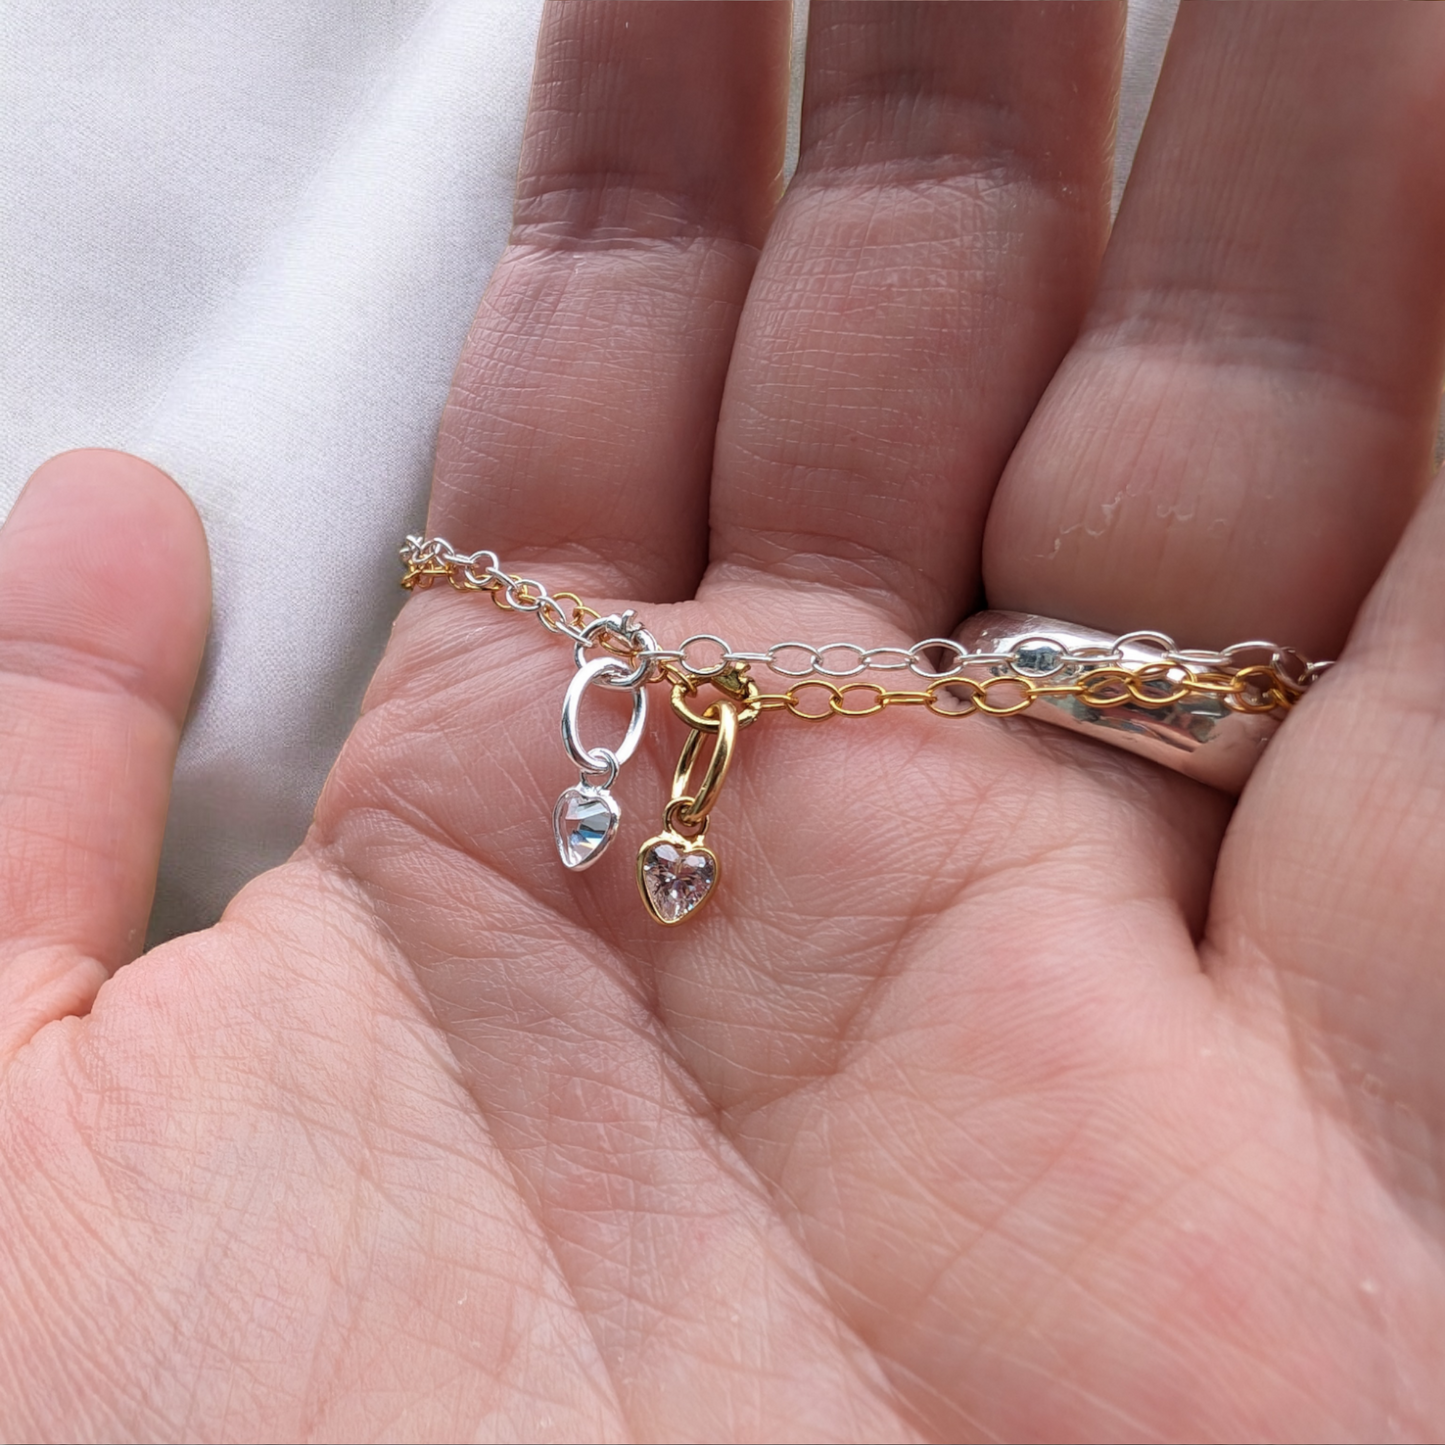 Love links permanent bracelet charms